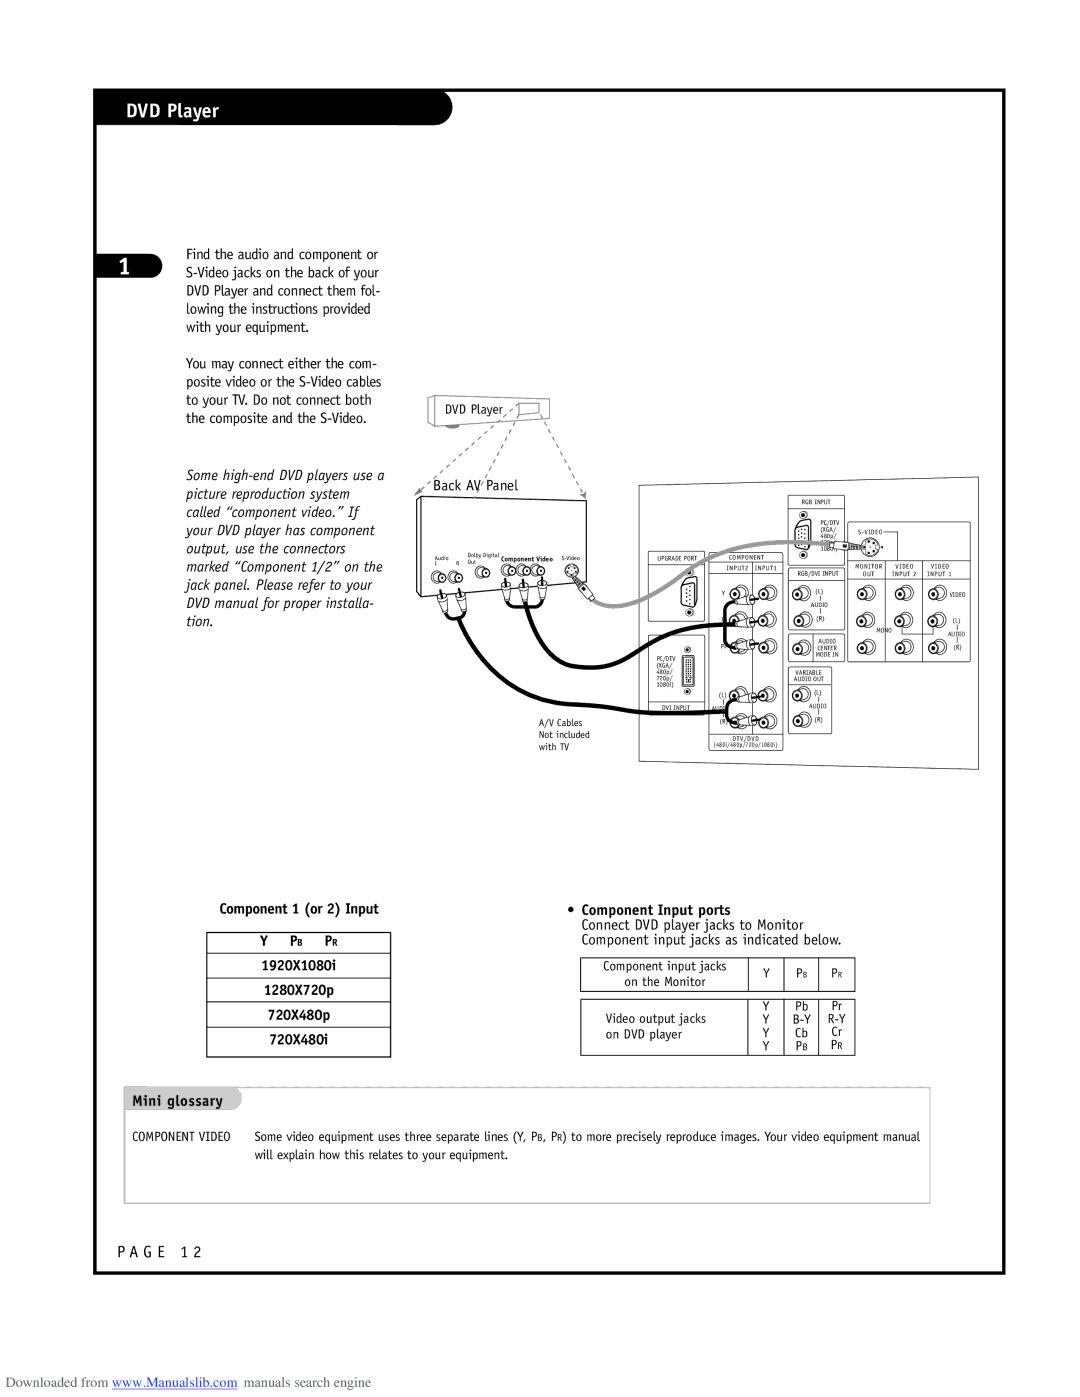 LG Electronics ru-44sz80l owner manual DVD Player, Back AV Panel, Pb Pr 